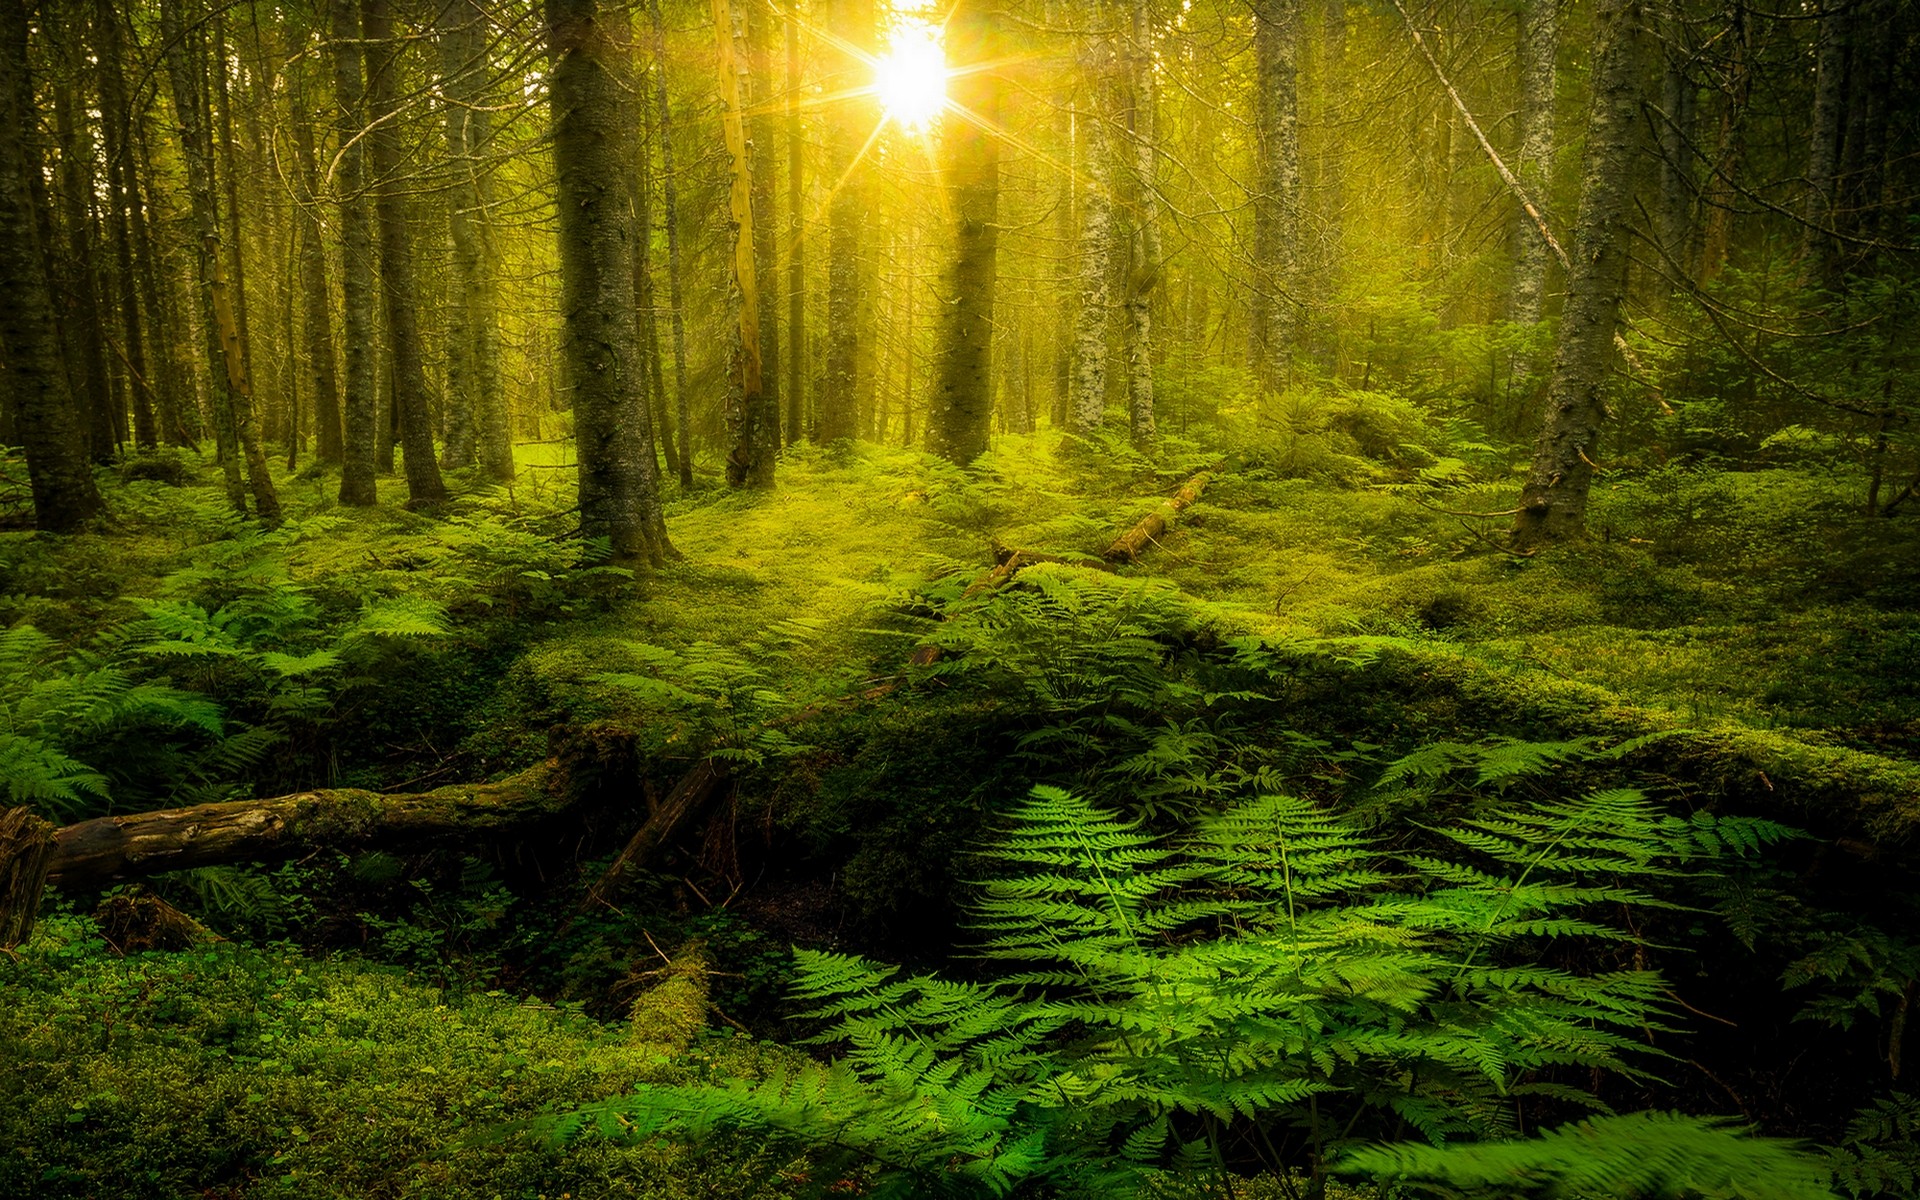 General 1920x1200 nature ferns forest trees moss green shrubs plants sunlight lens flare outdoors